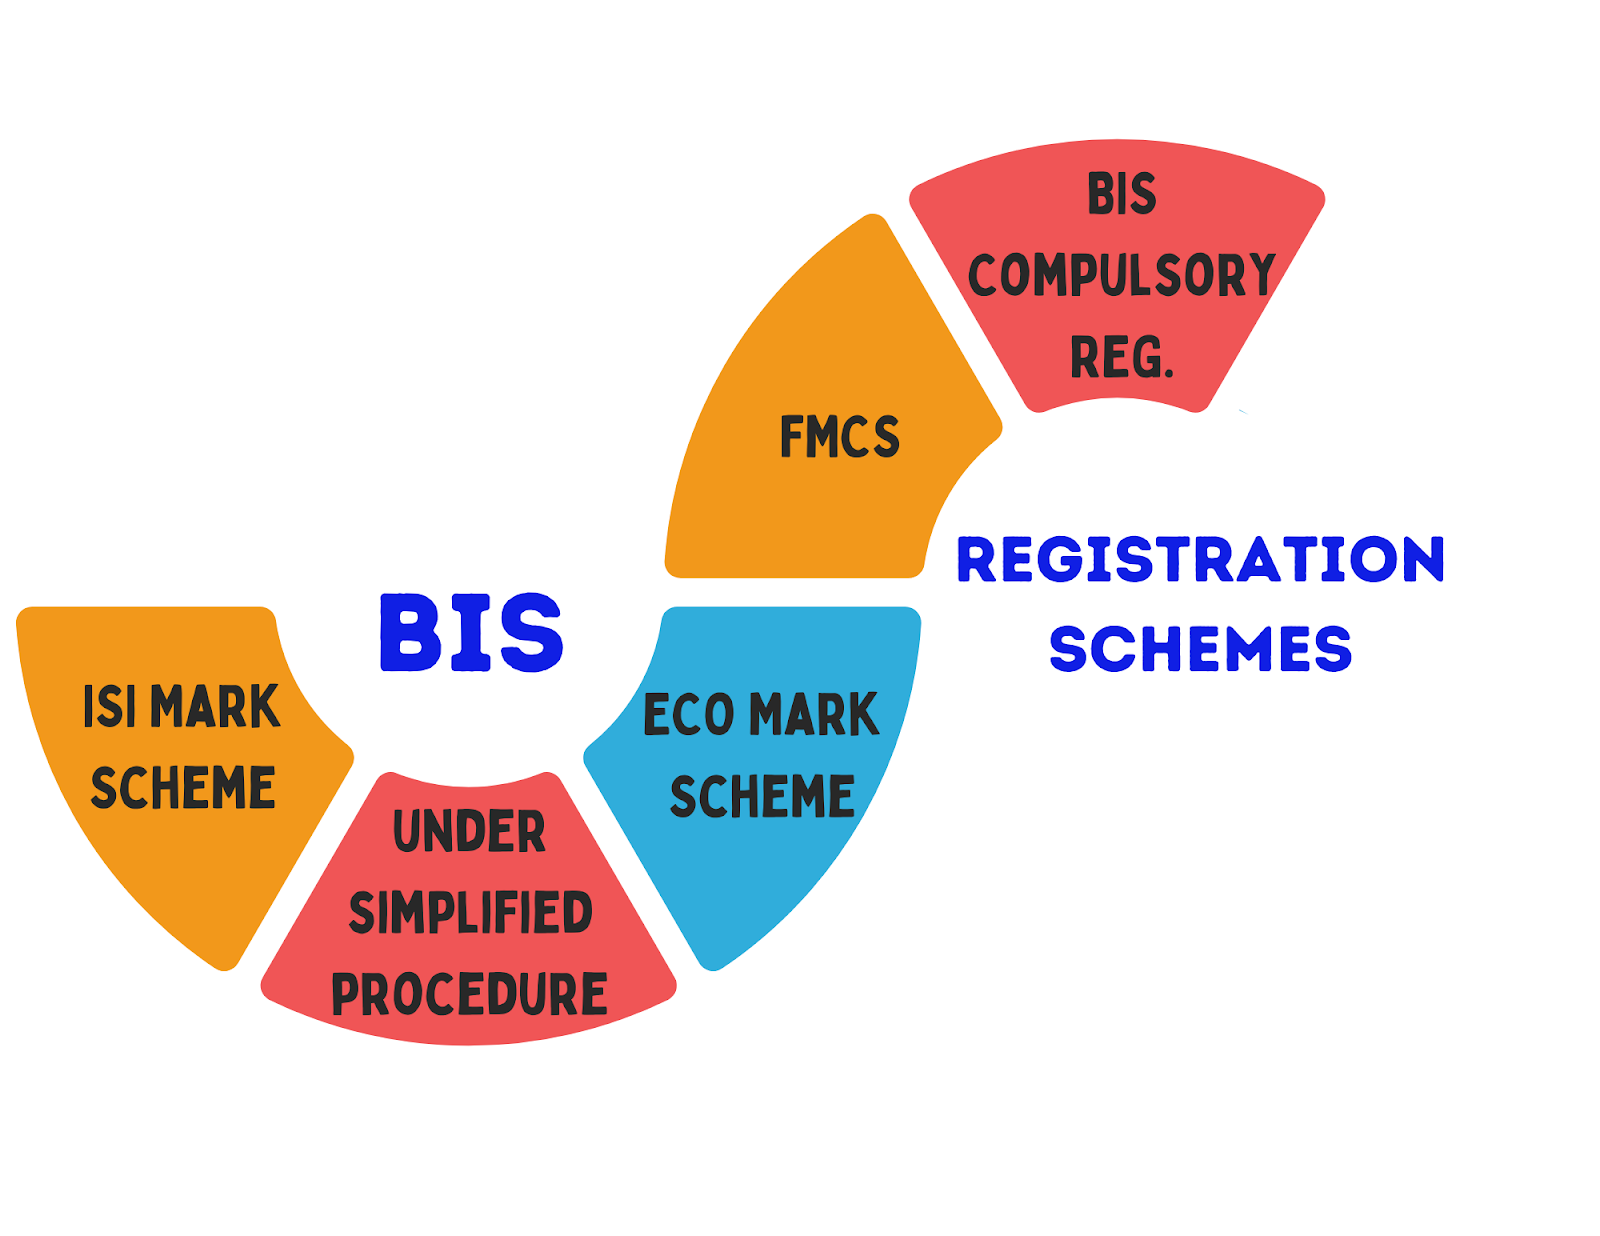 Image displaying BIS Compulsory Registration Schemes